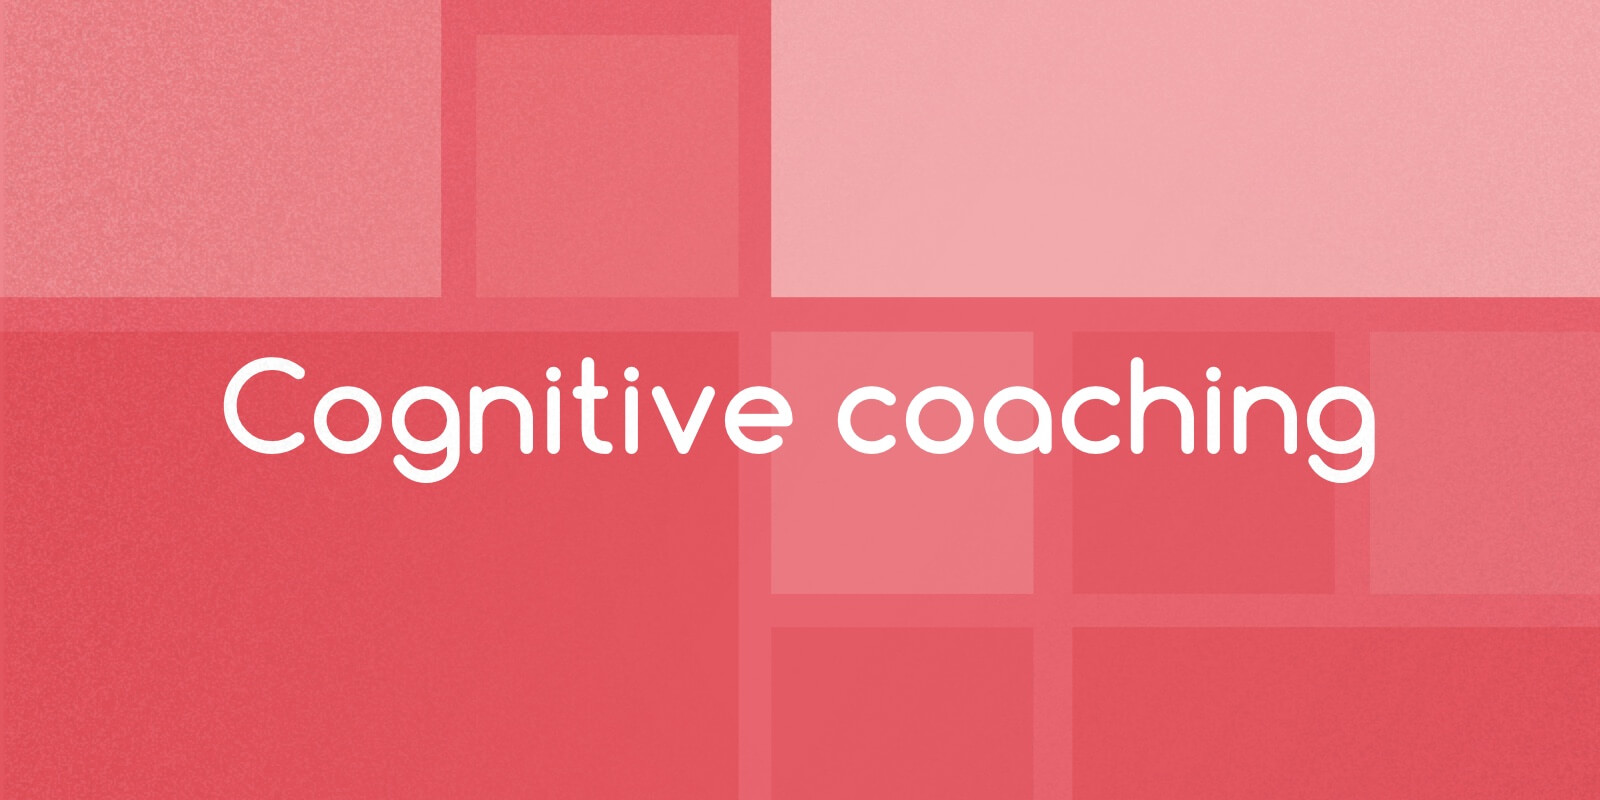 Cognitive coaching